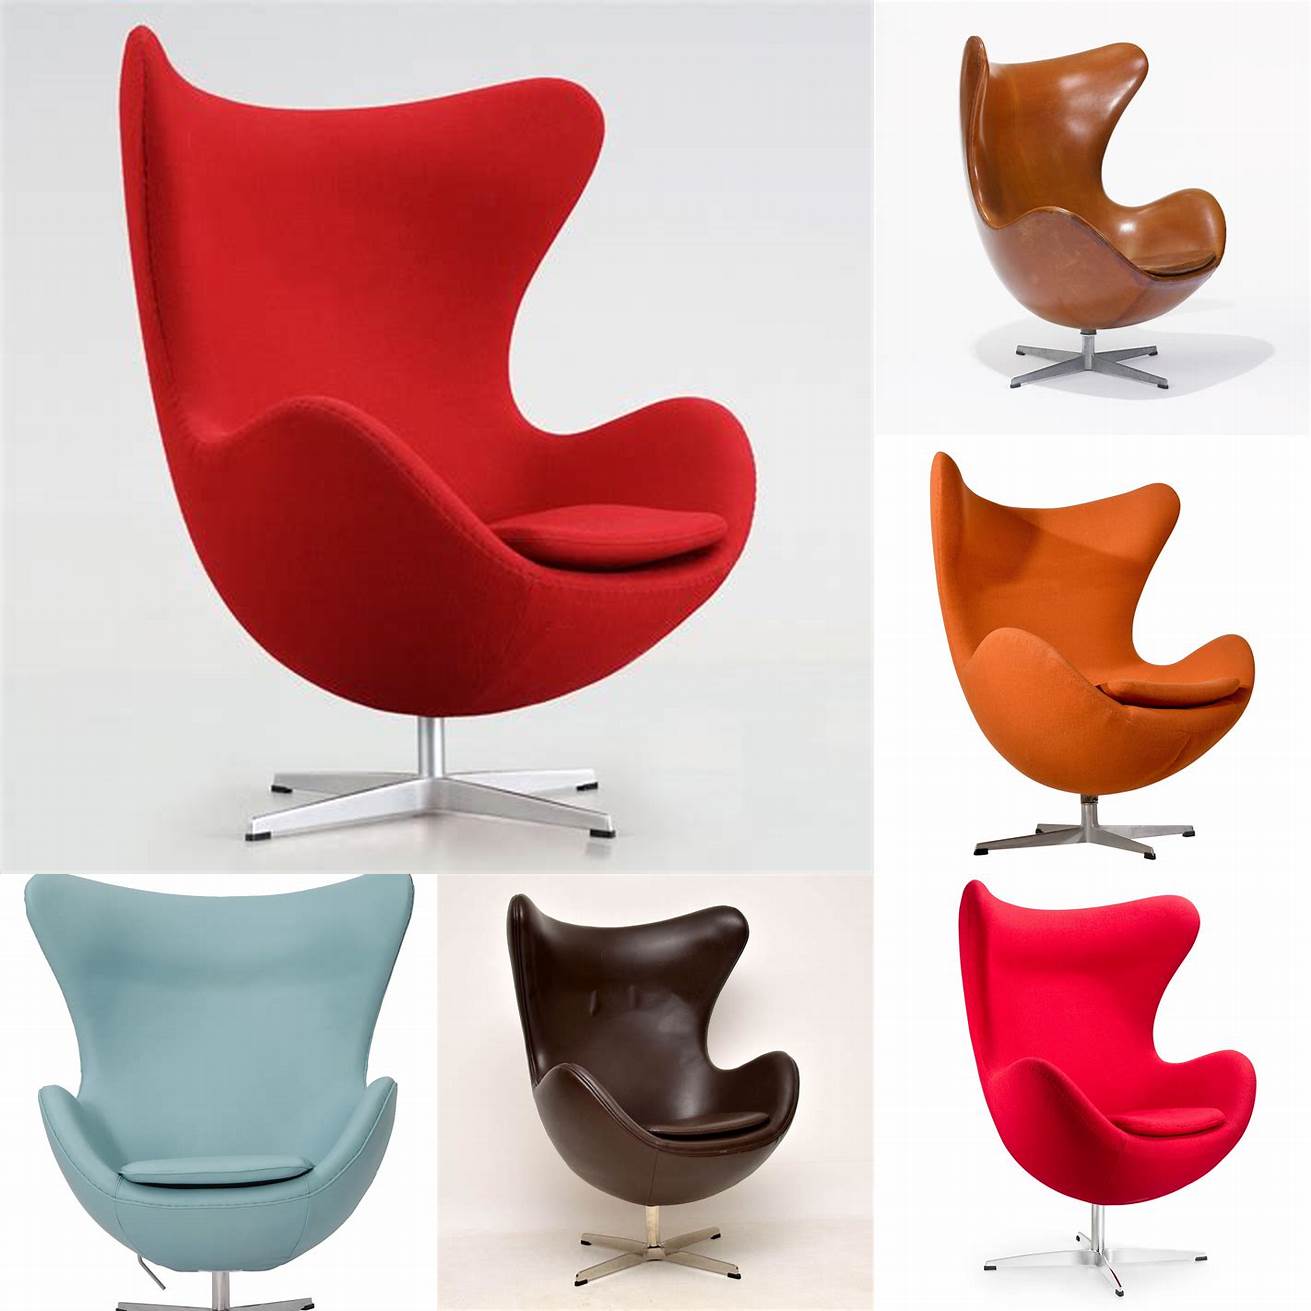 Egg chair by Arne Jacobsen